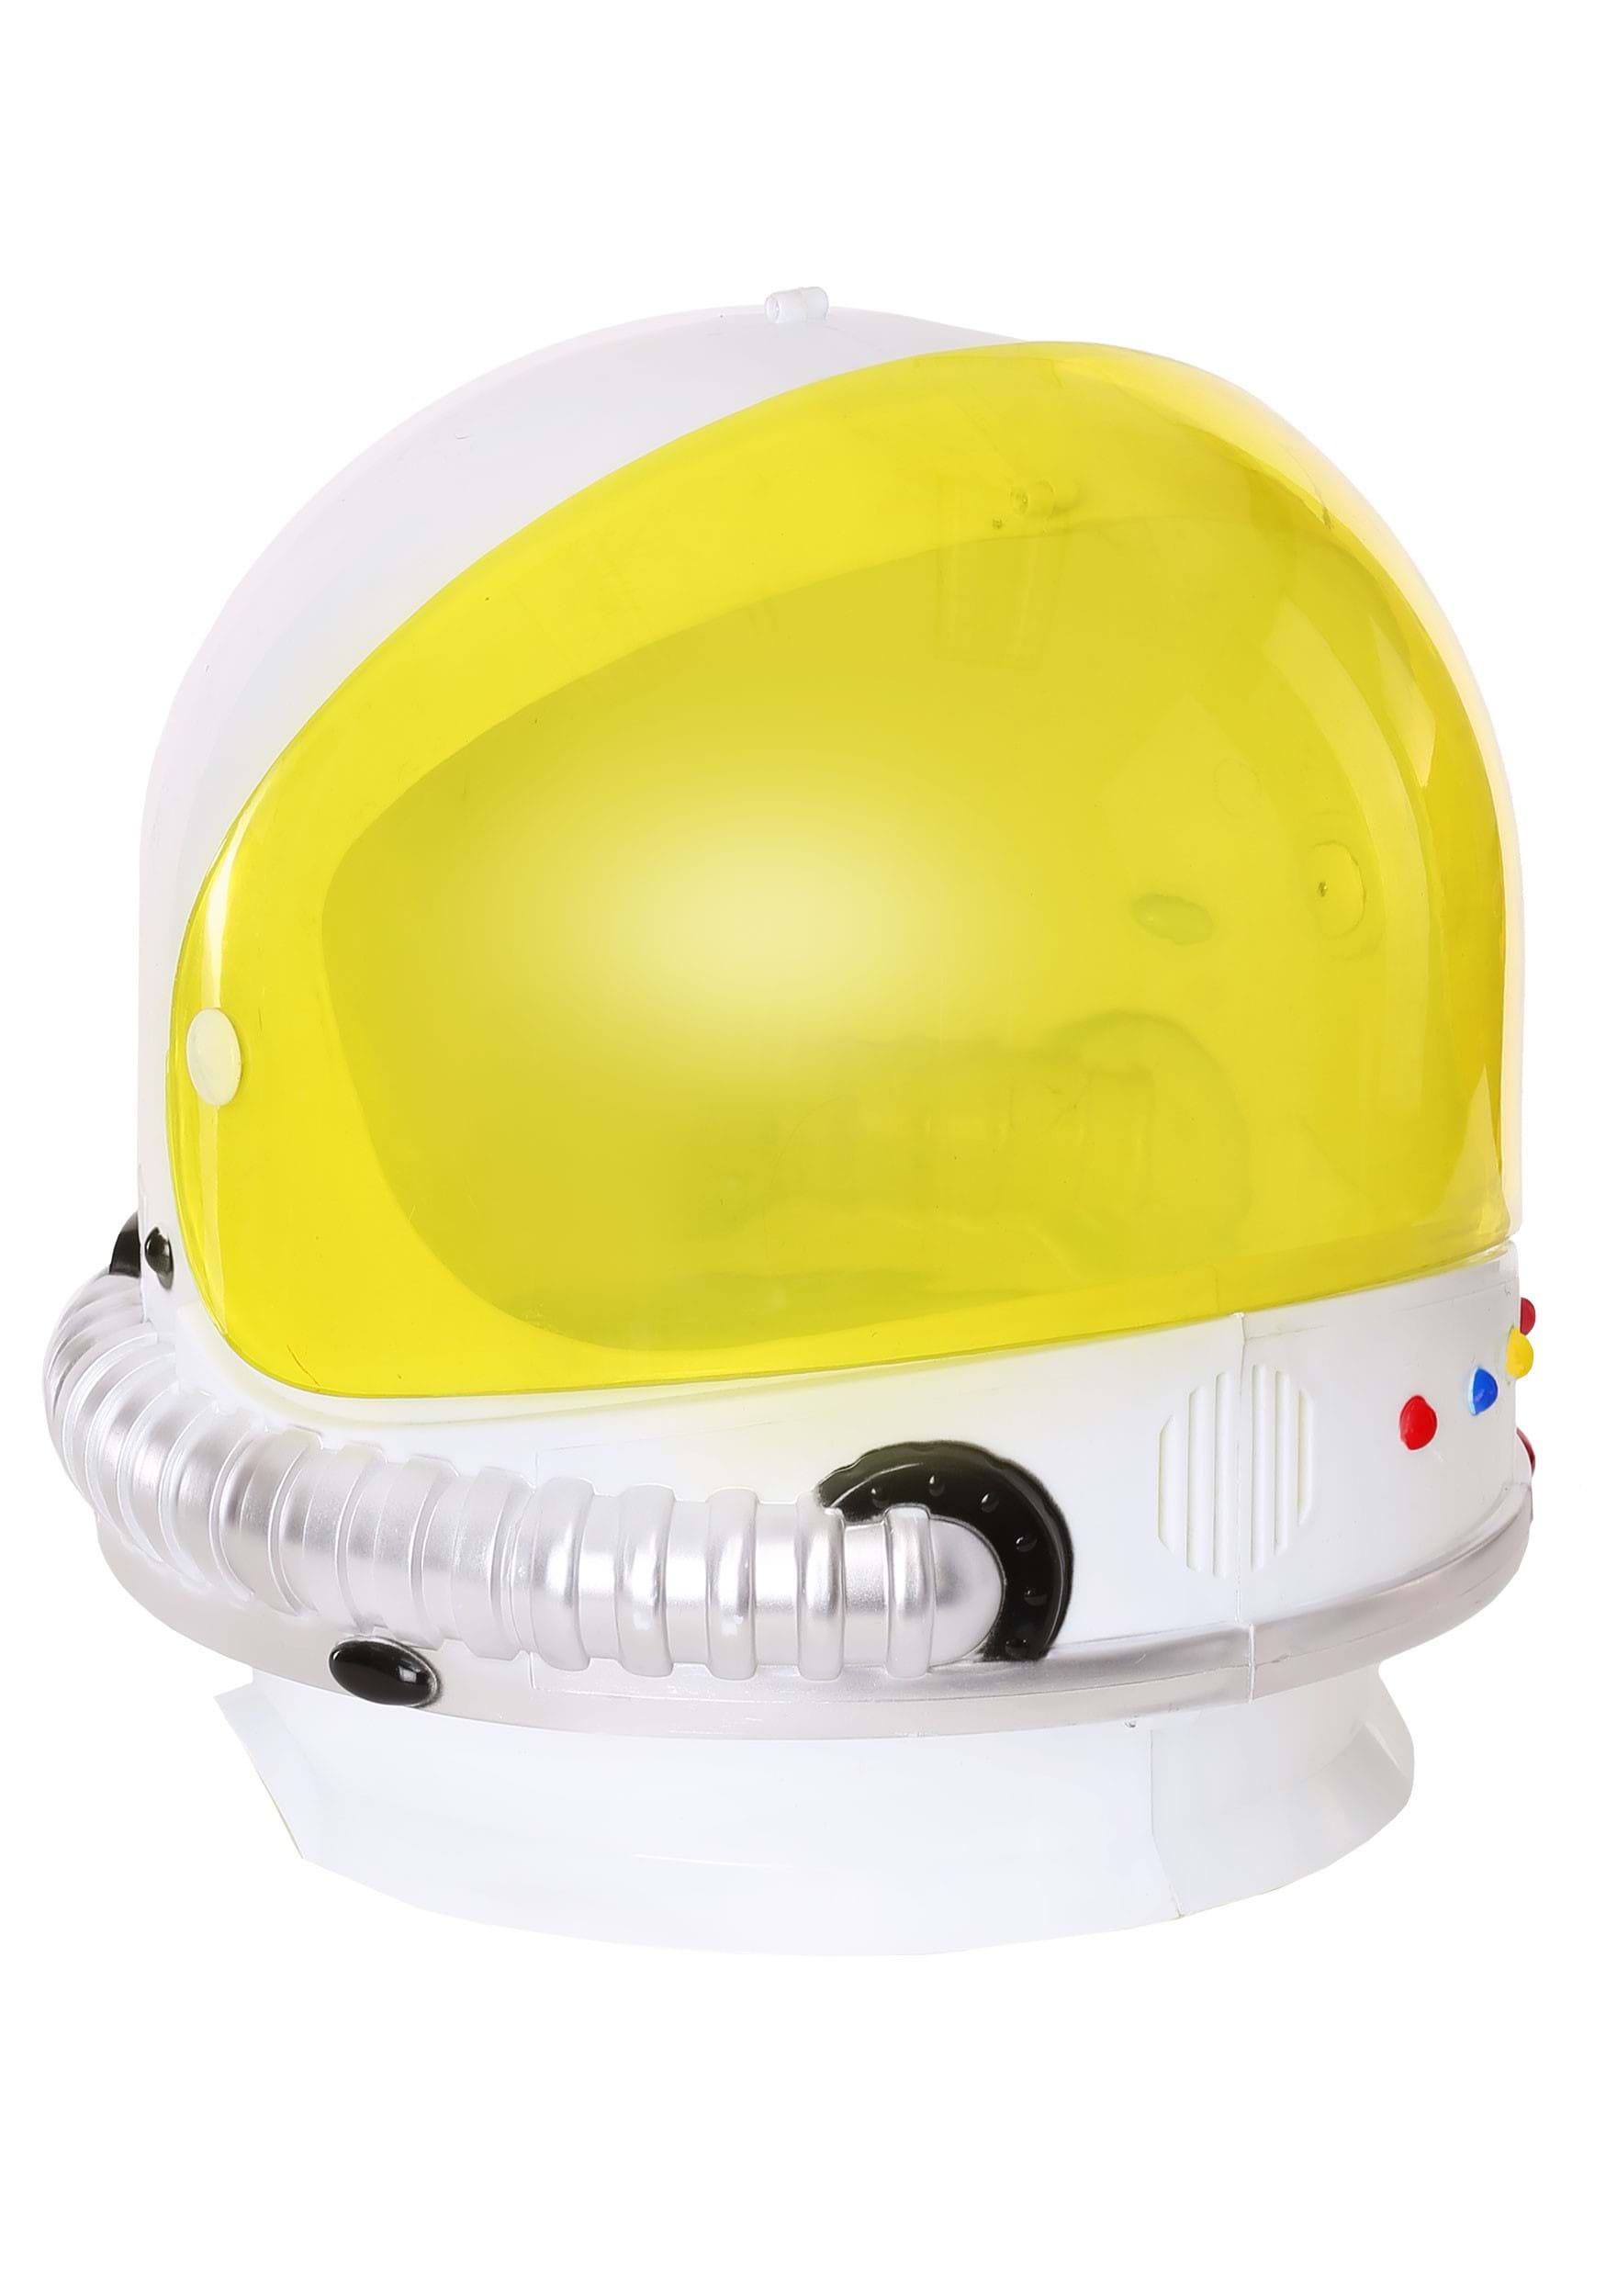 Astronaut Costume Helmet for Adults